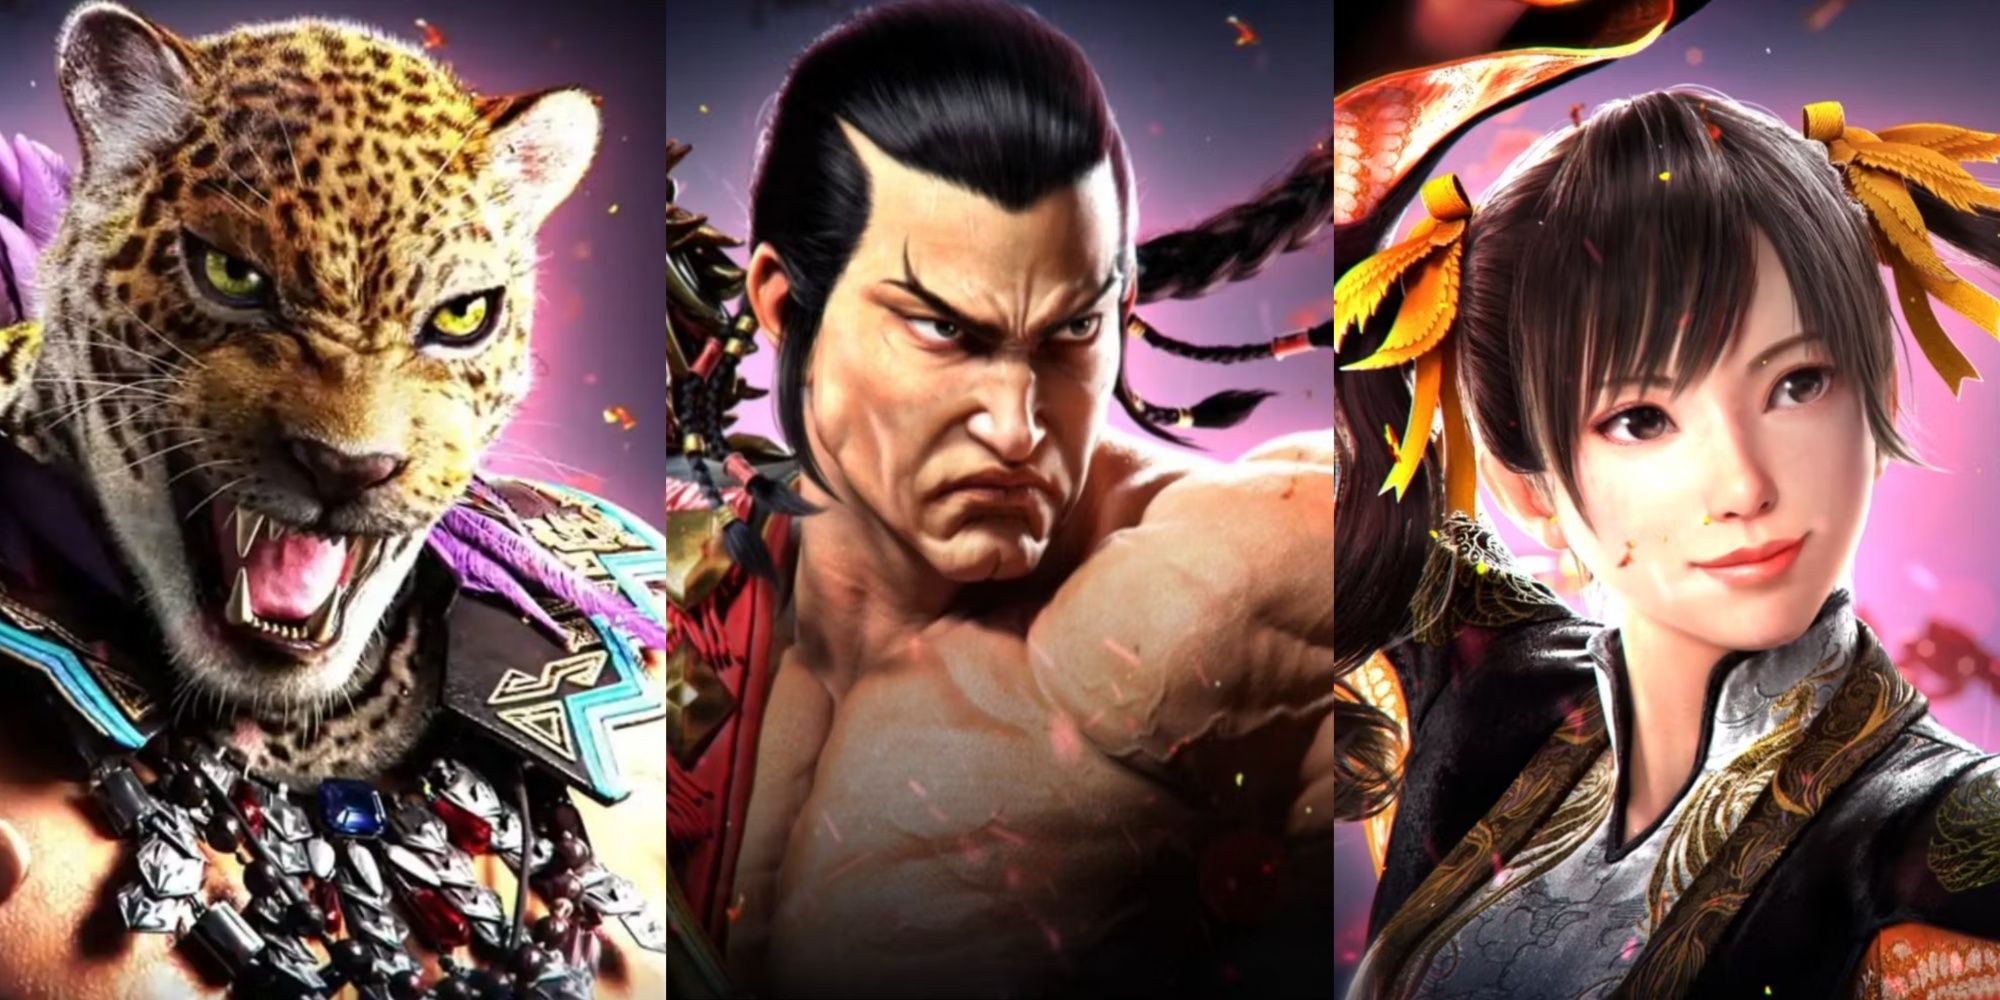 Tekken 8 Roster: Here's every confirmed character